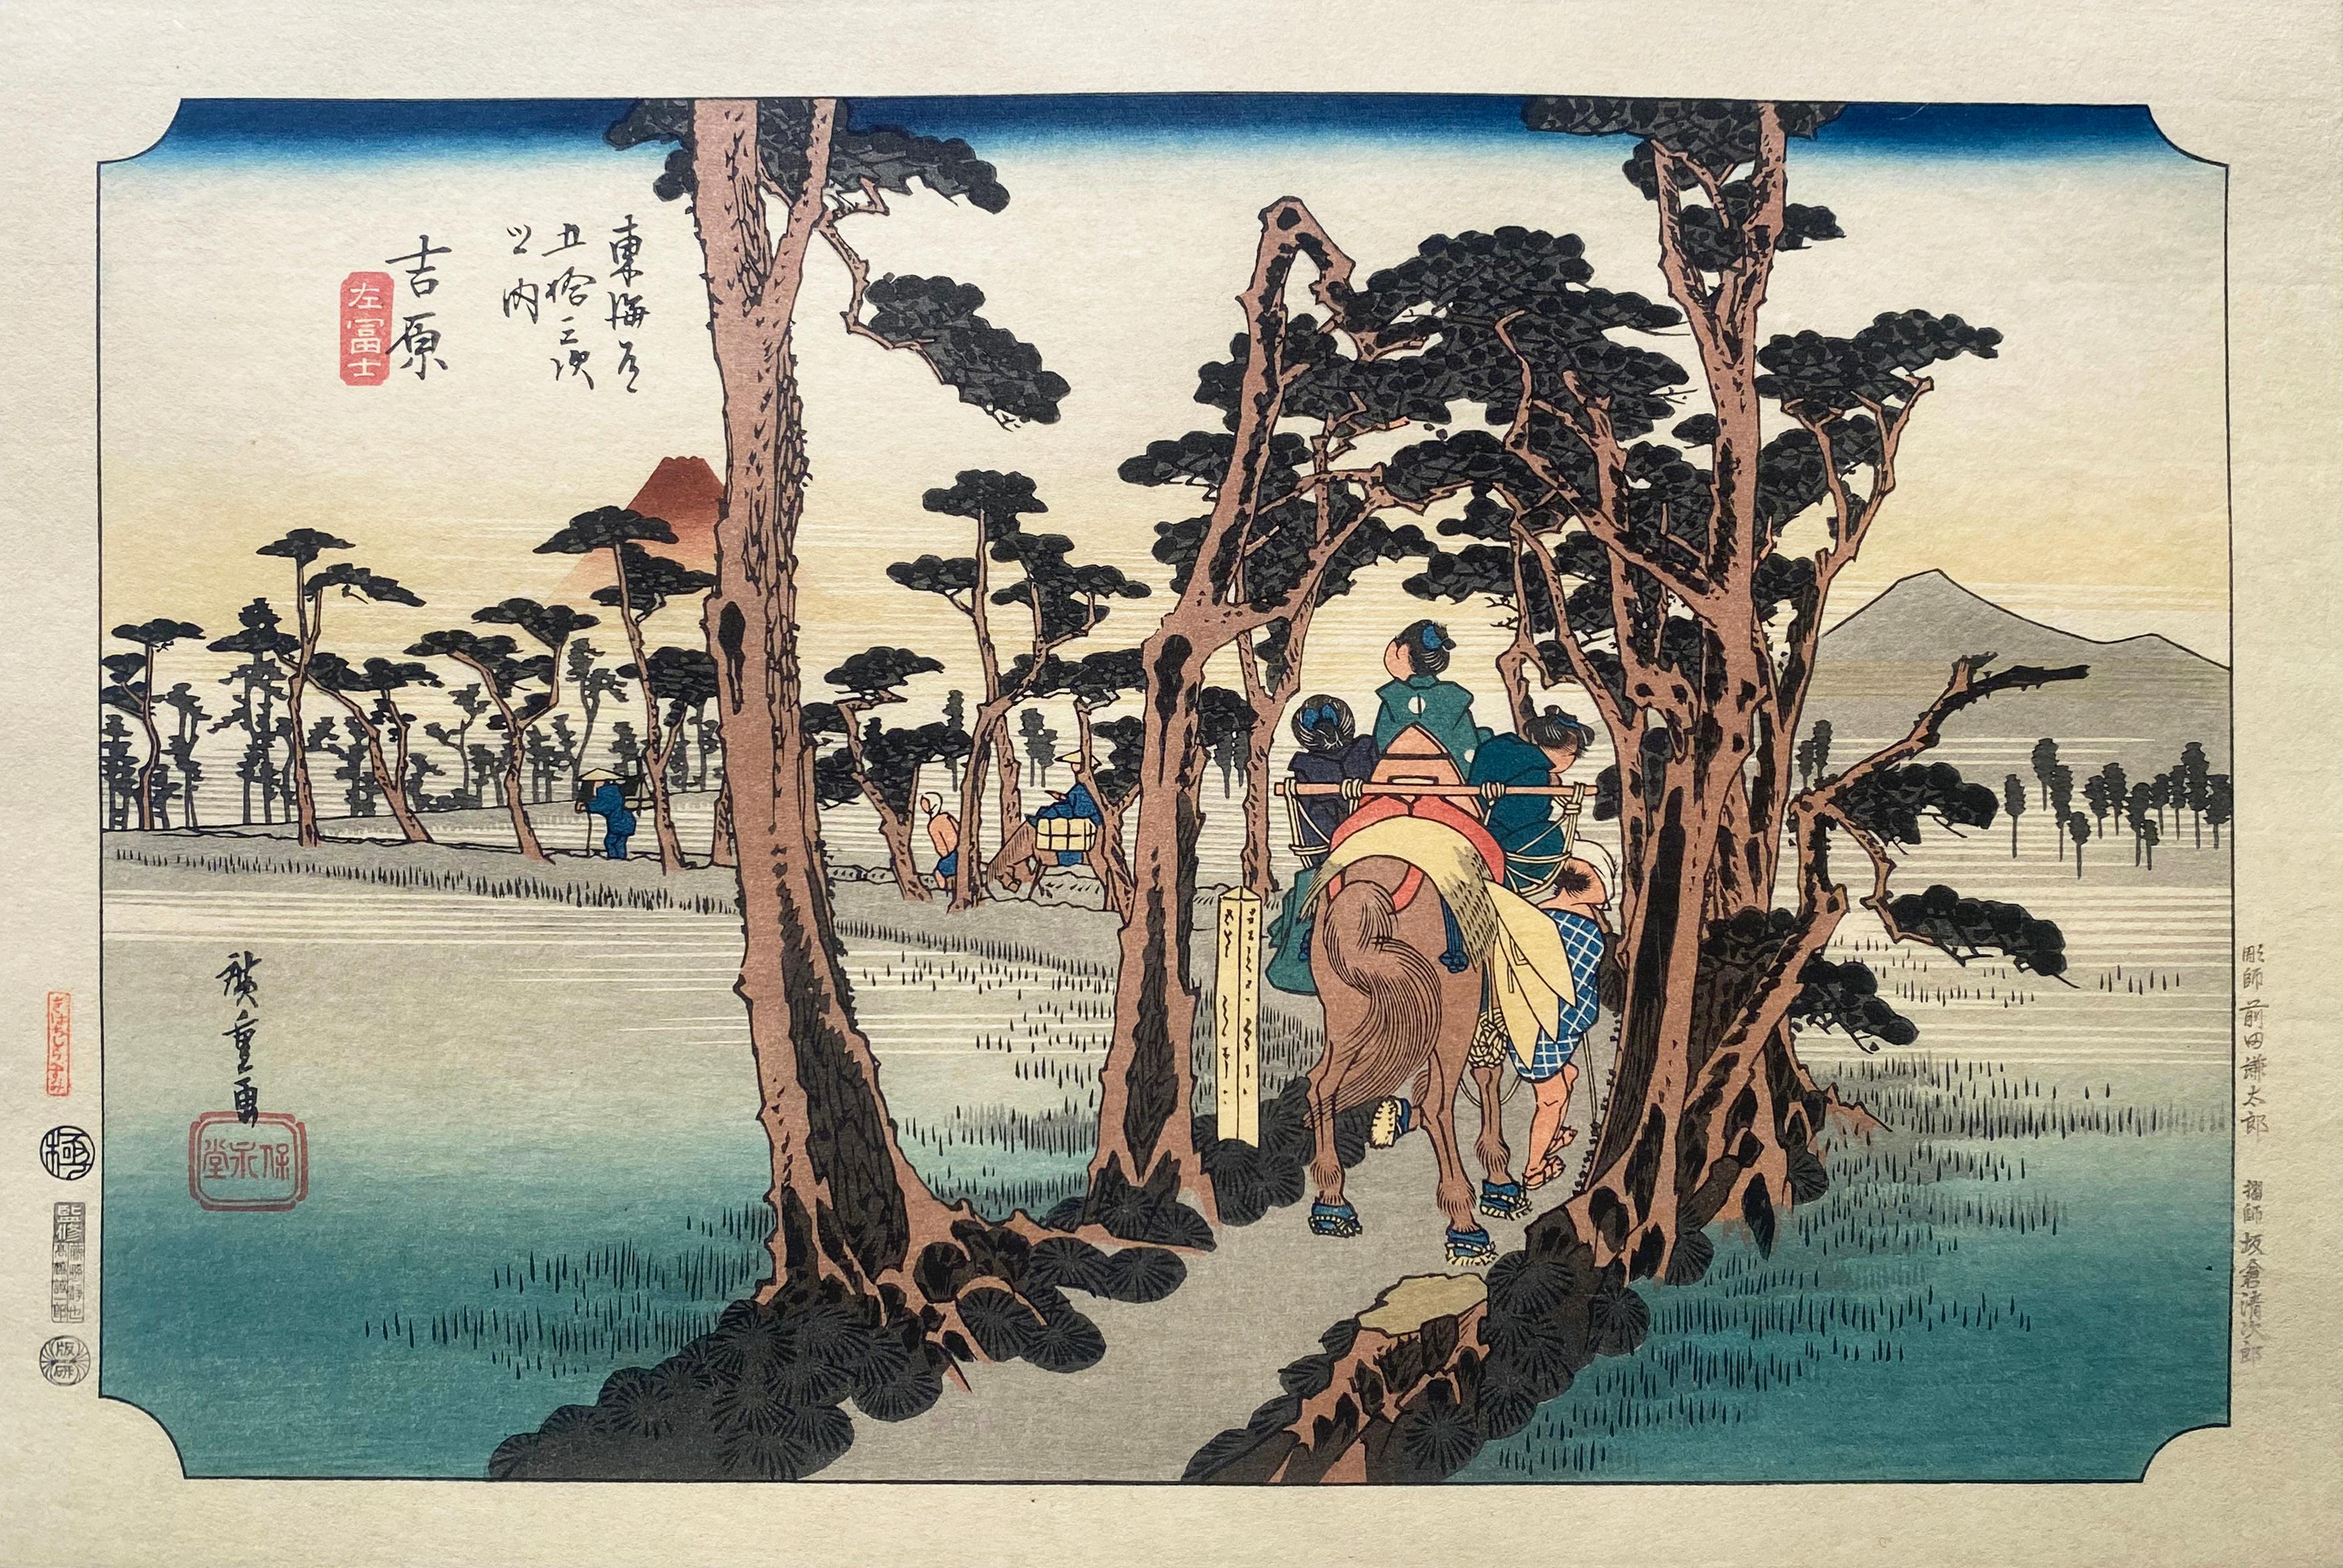 Utagawa Hiroshige (Ando Hiroshige) Landscape Print - 'View of Yoshiwara', After Utagawa Hiroshige 歌川廣重, Ukiyo-e Woodblock, Tokaido